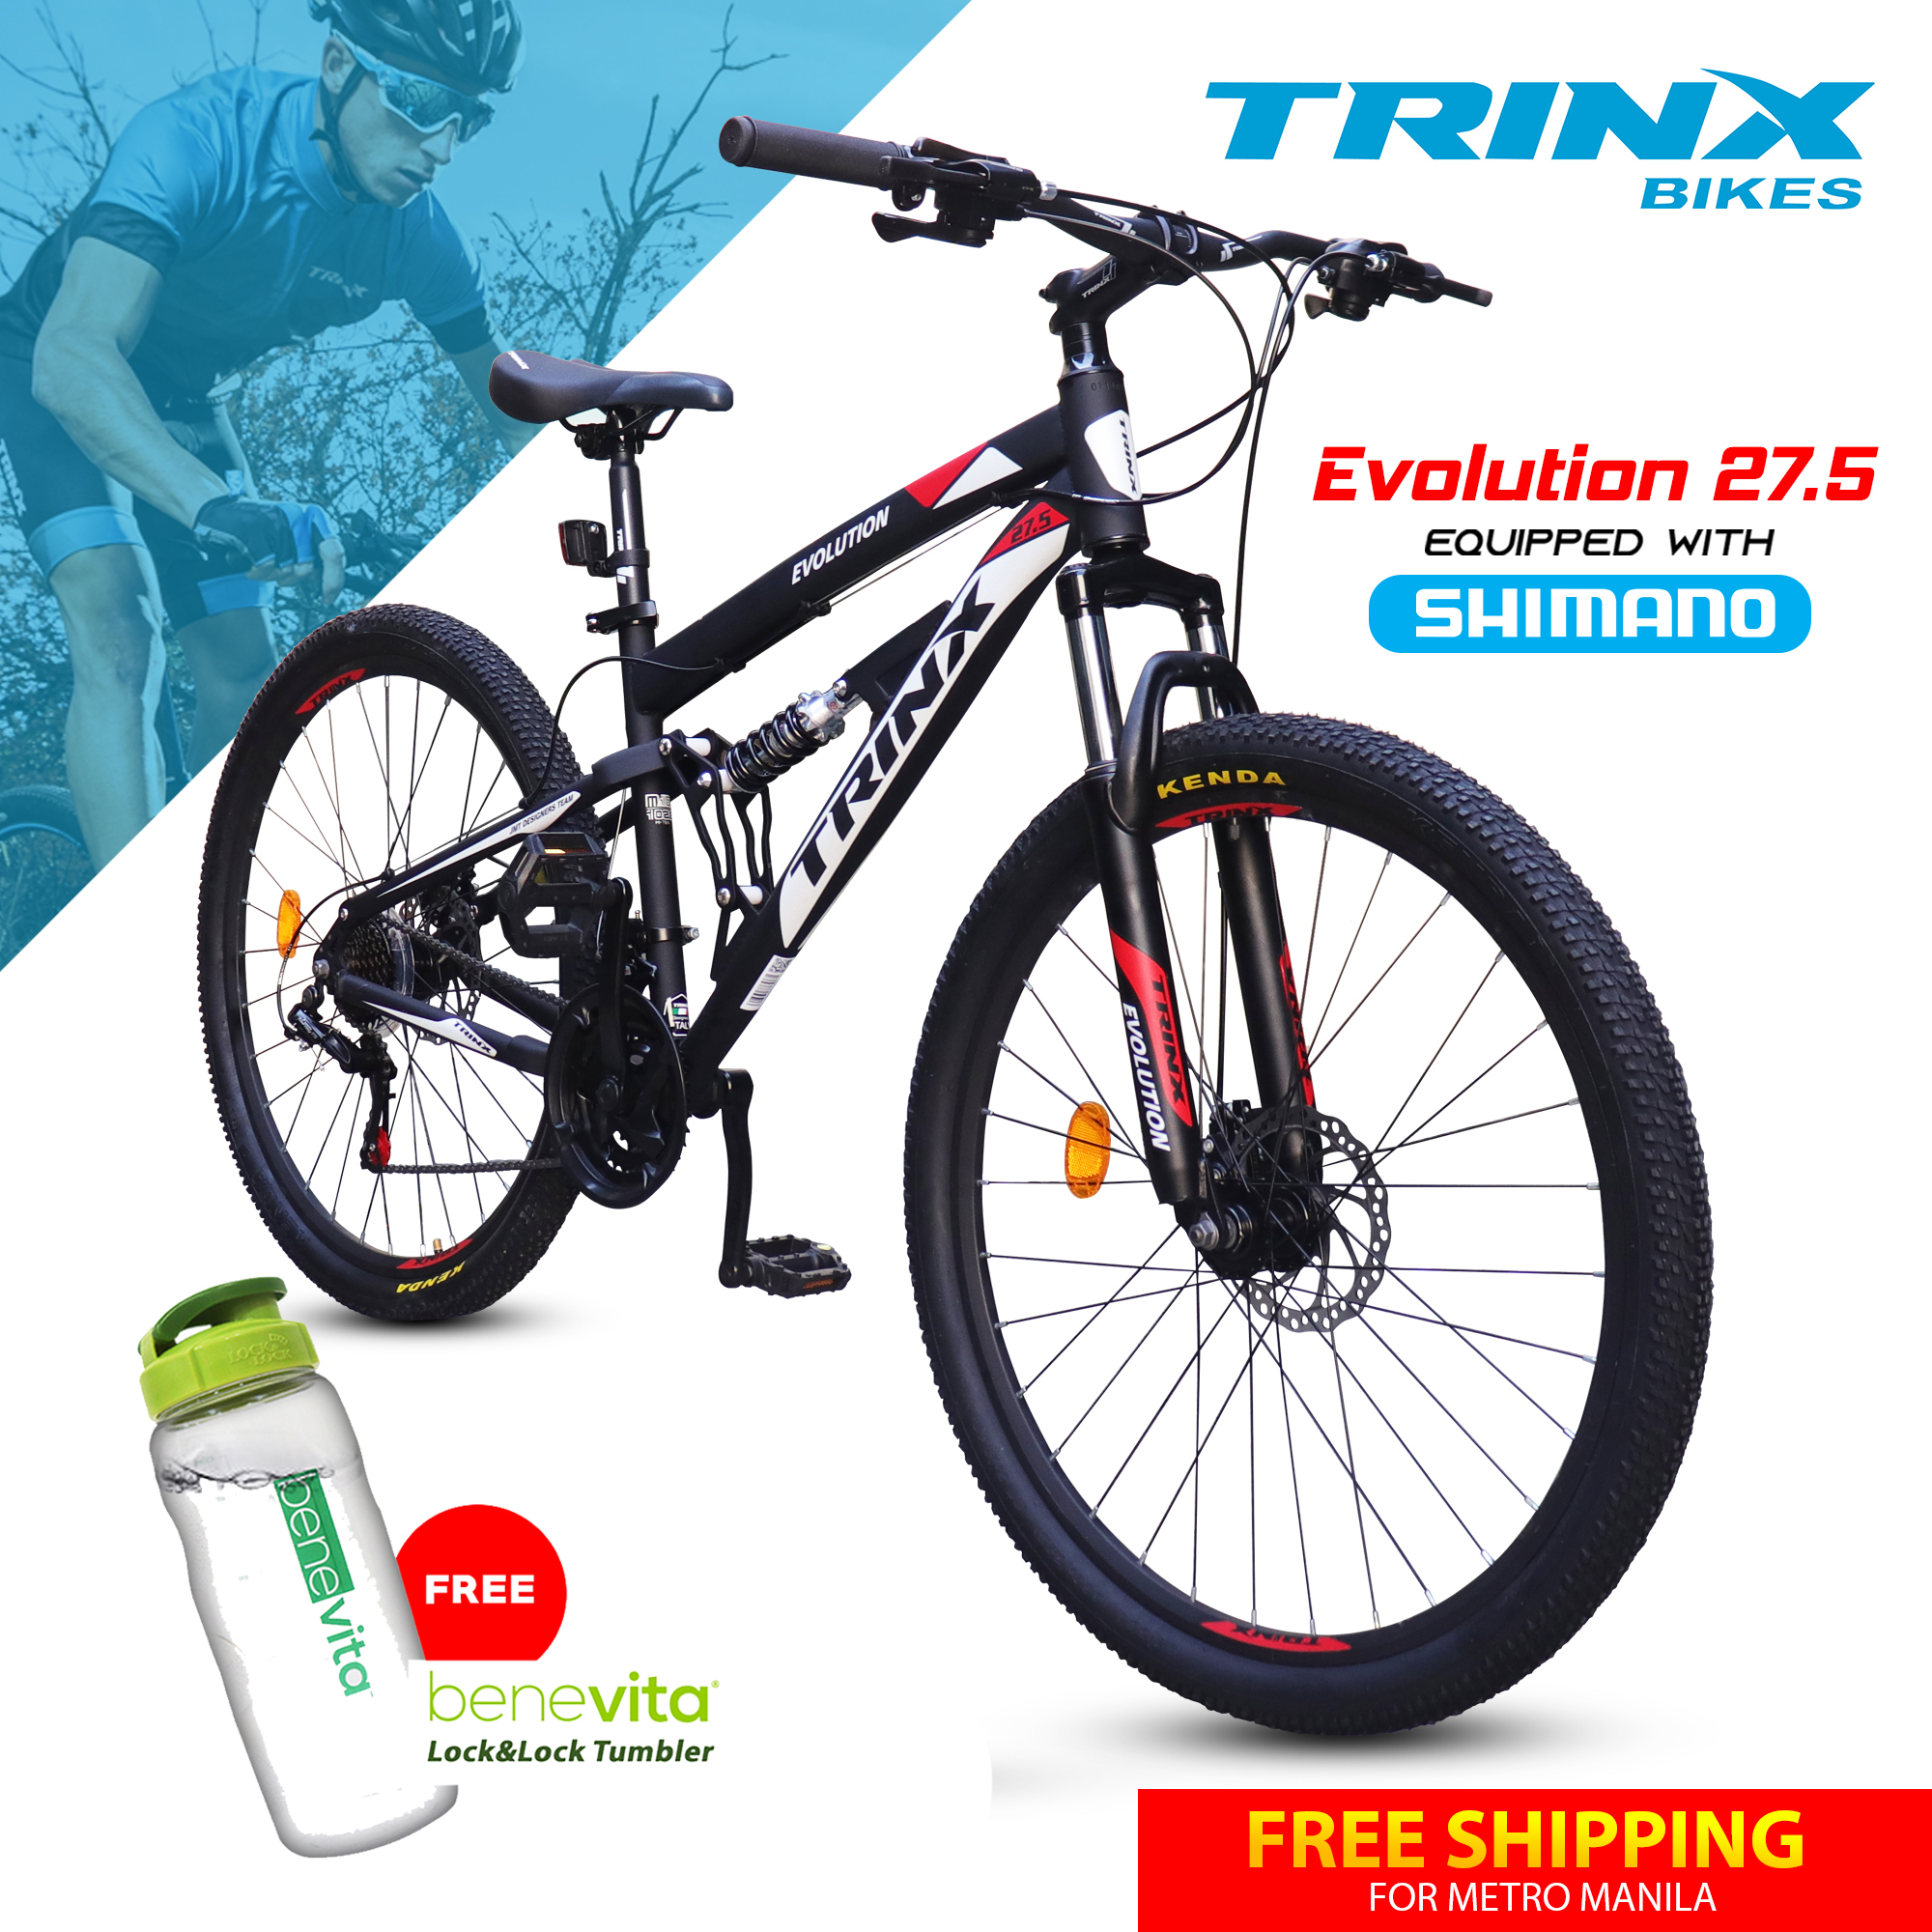 trinx bike lazada